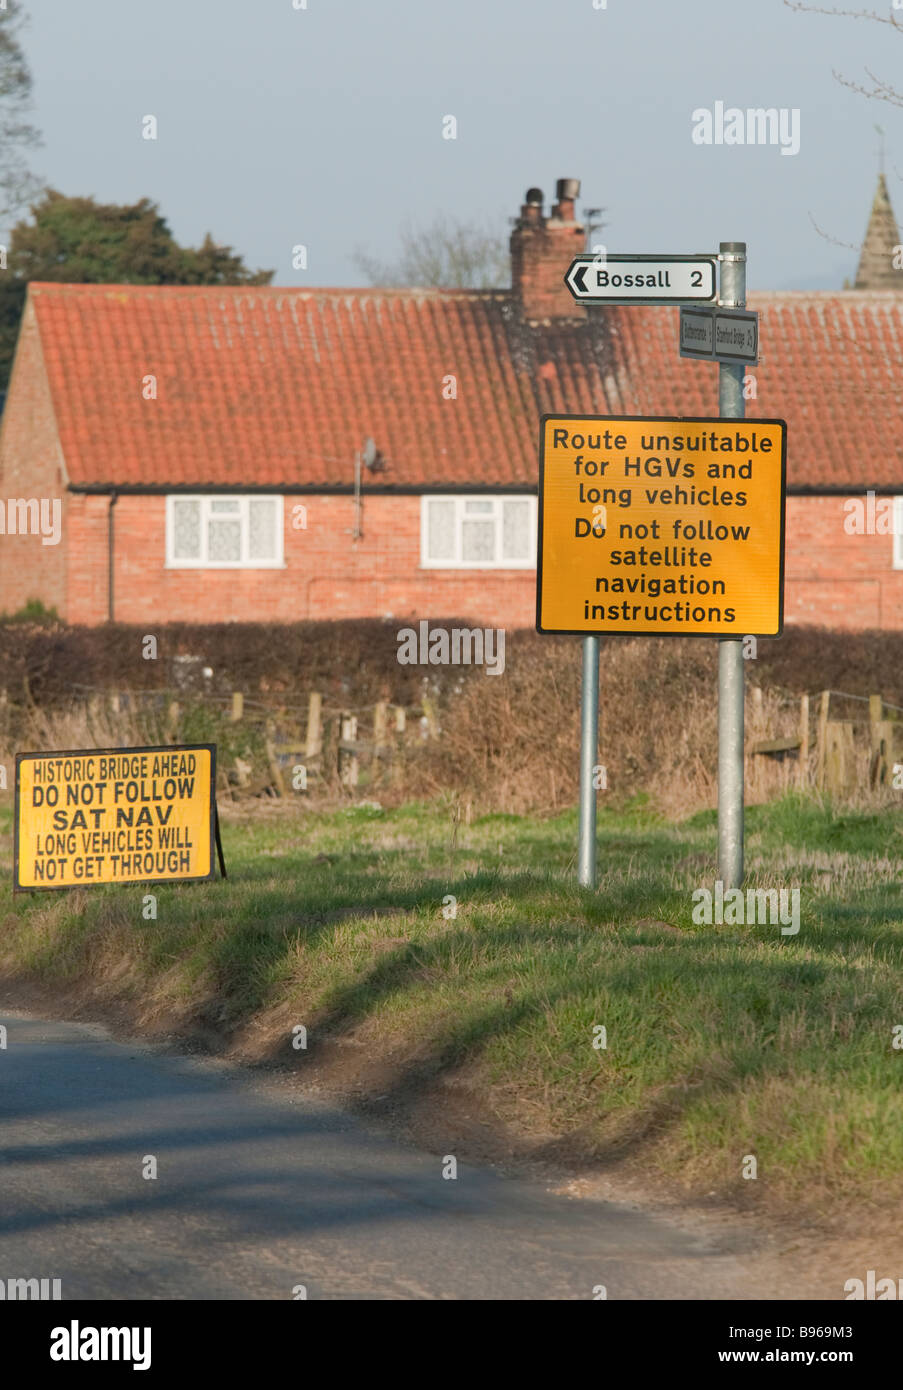 Signs at entrance to a small village warning HGV drivers to ignore satnav directions. Stock Photo